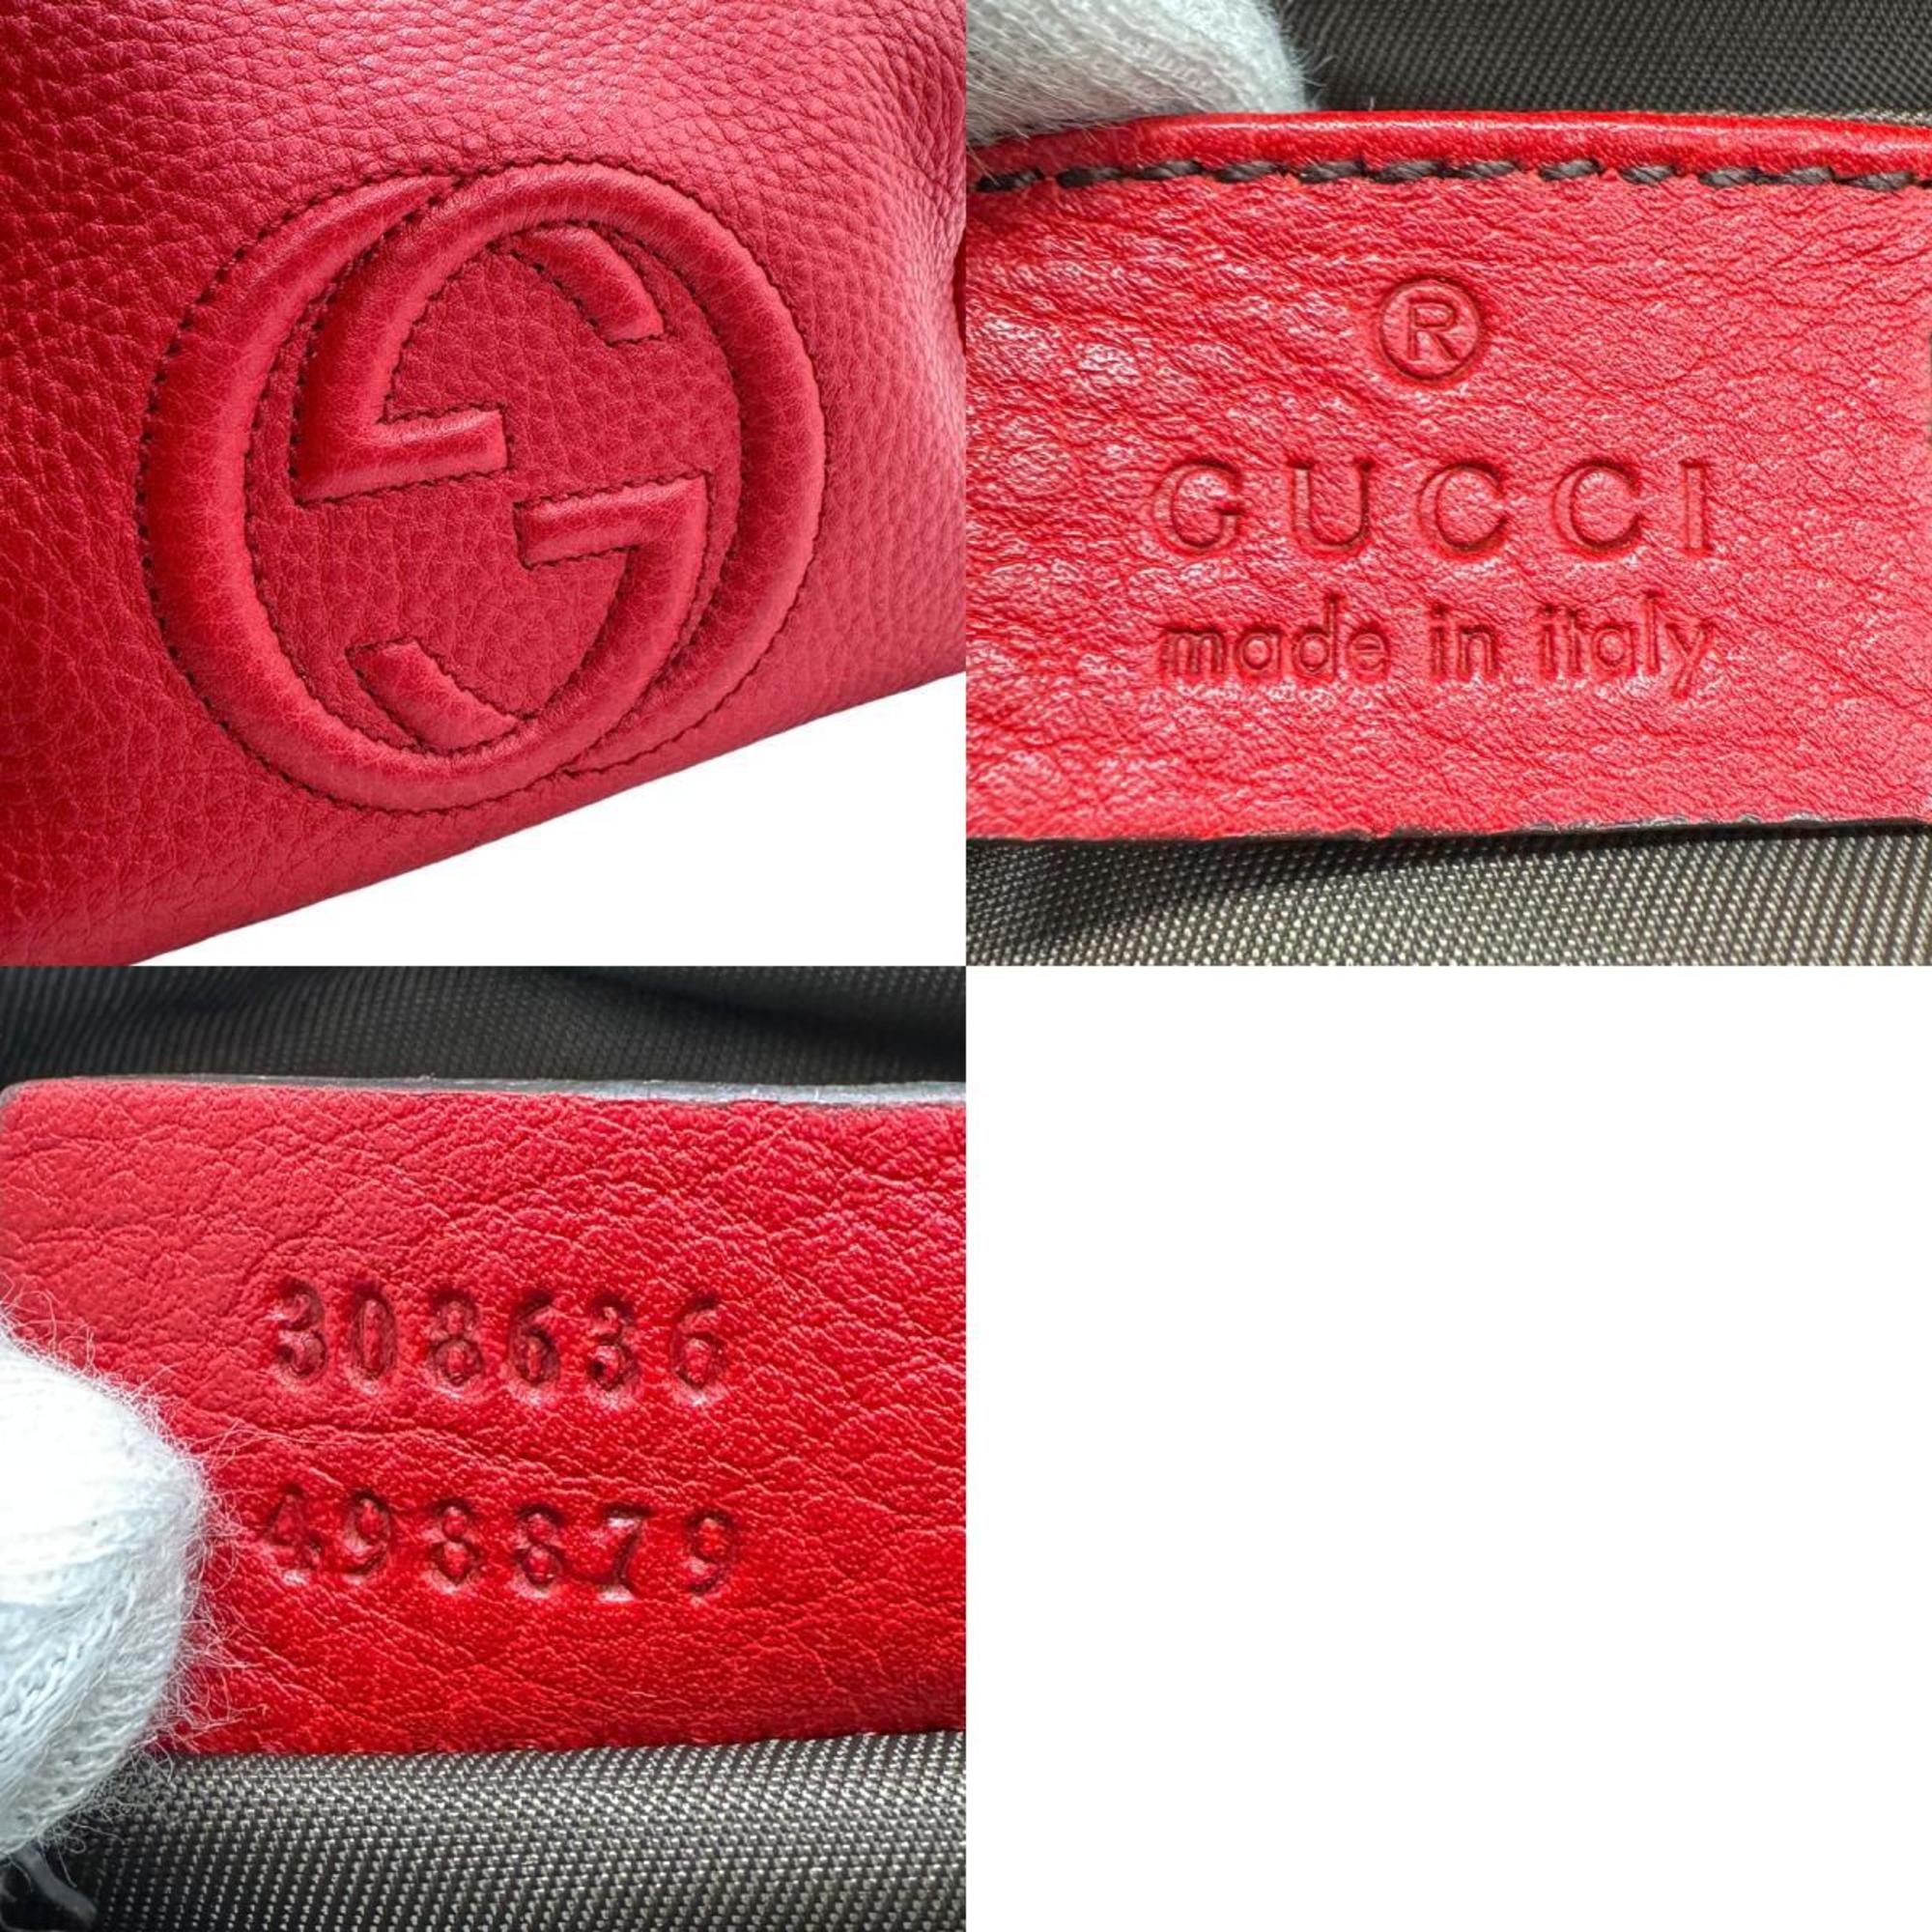 GUCCI Interlocking G Leather Pouch Red Women's 308636 z1231